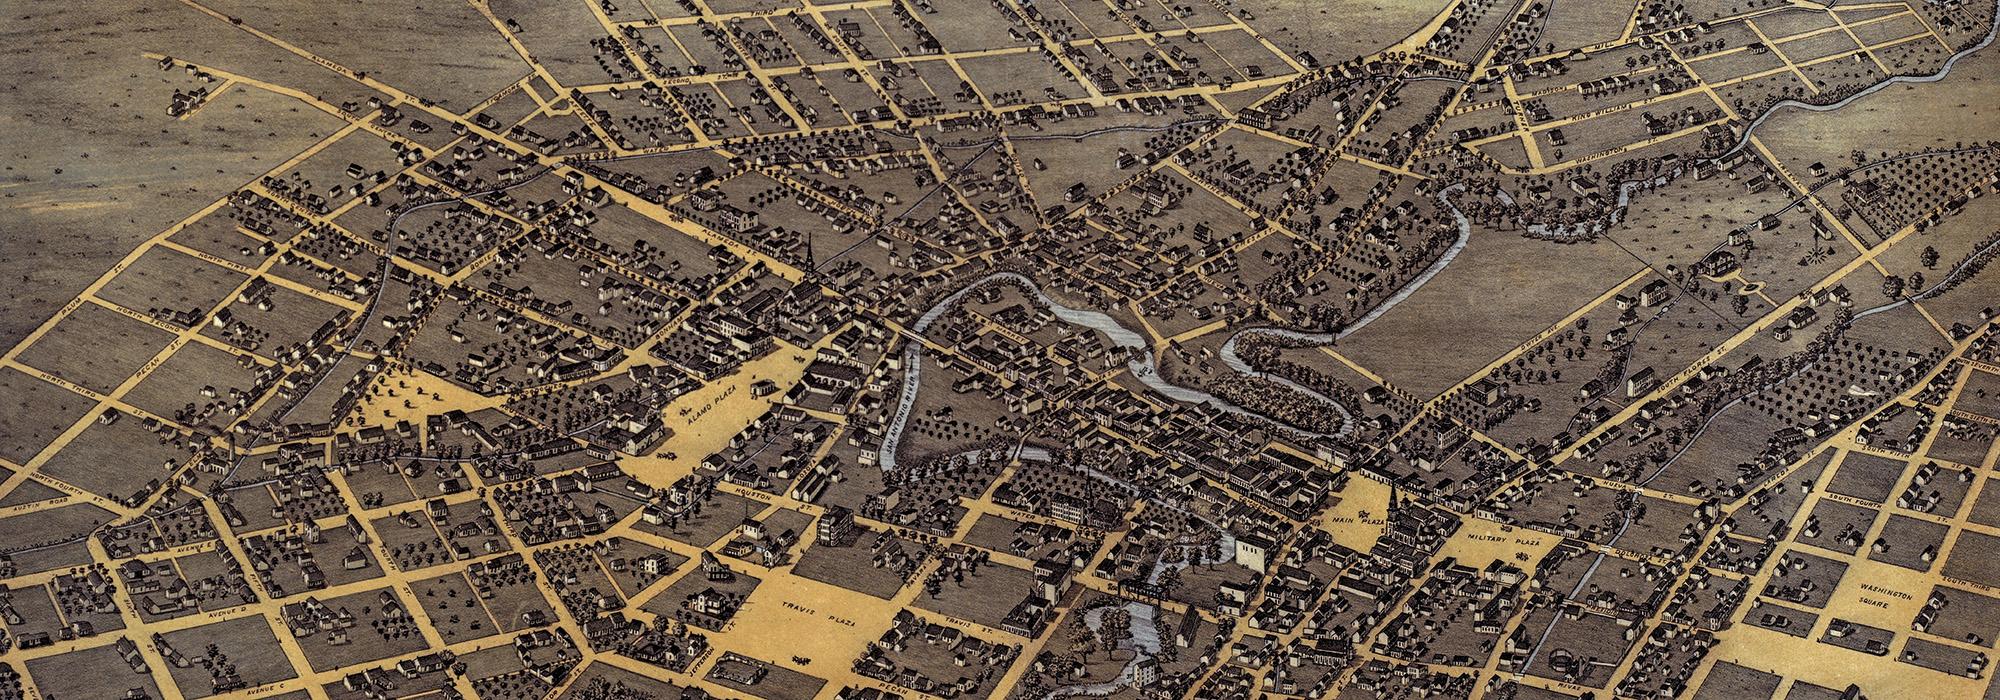 1873 Map of San Antonio, TX